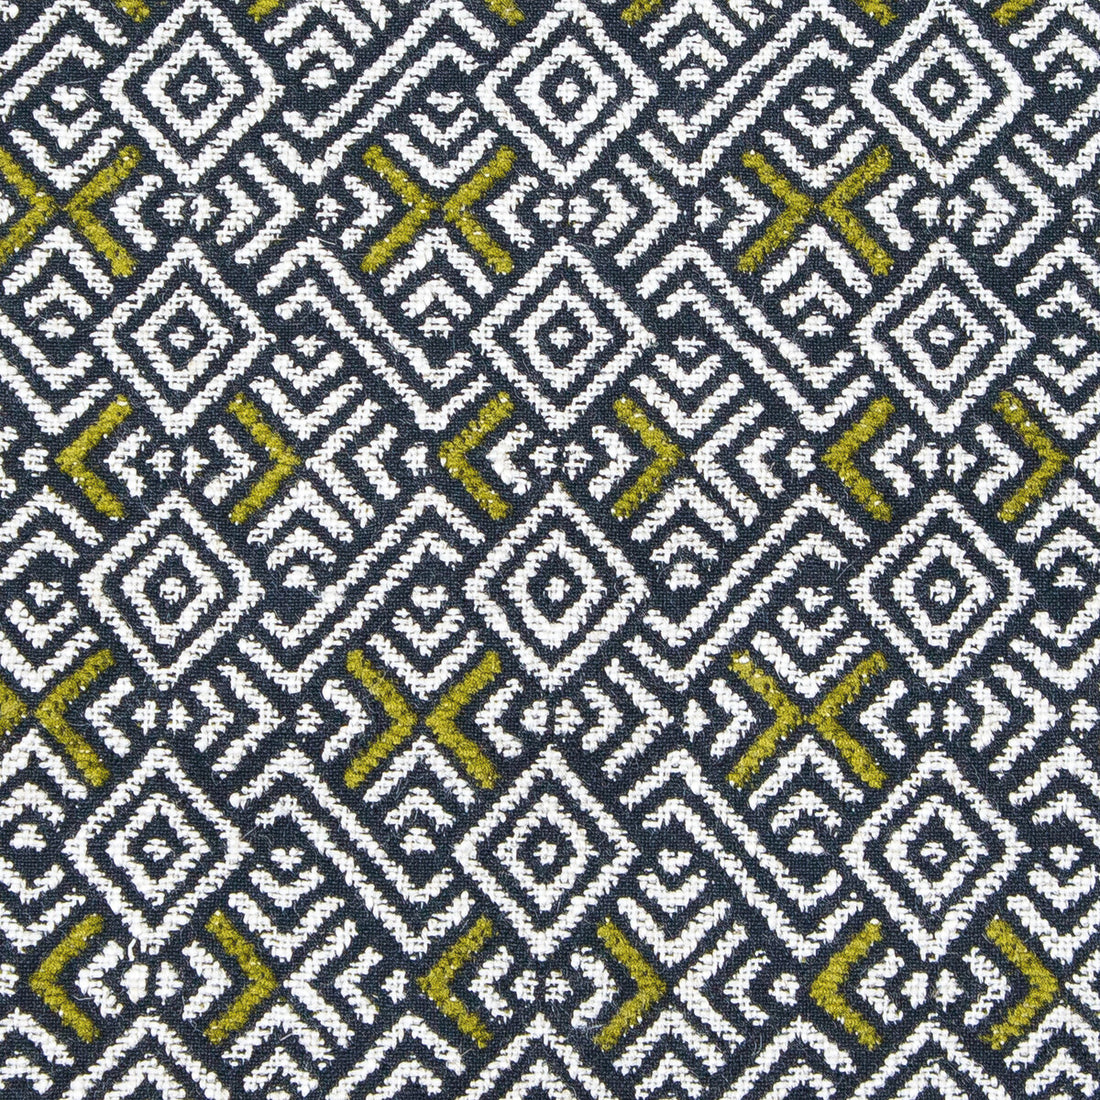 Inca fabric in verde color - pattern GDT5567.002.0 - by Gaston y Daniela in the Gaston Nuevo Mundo collection